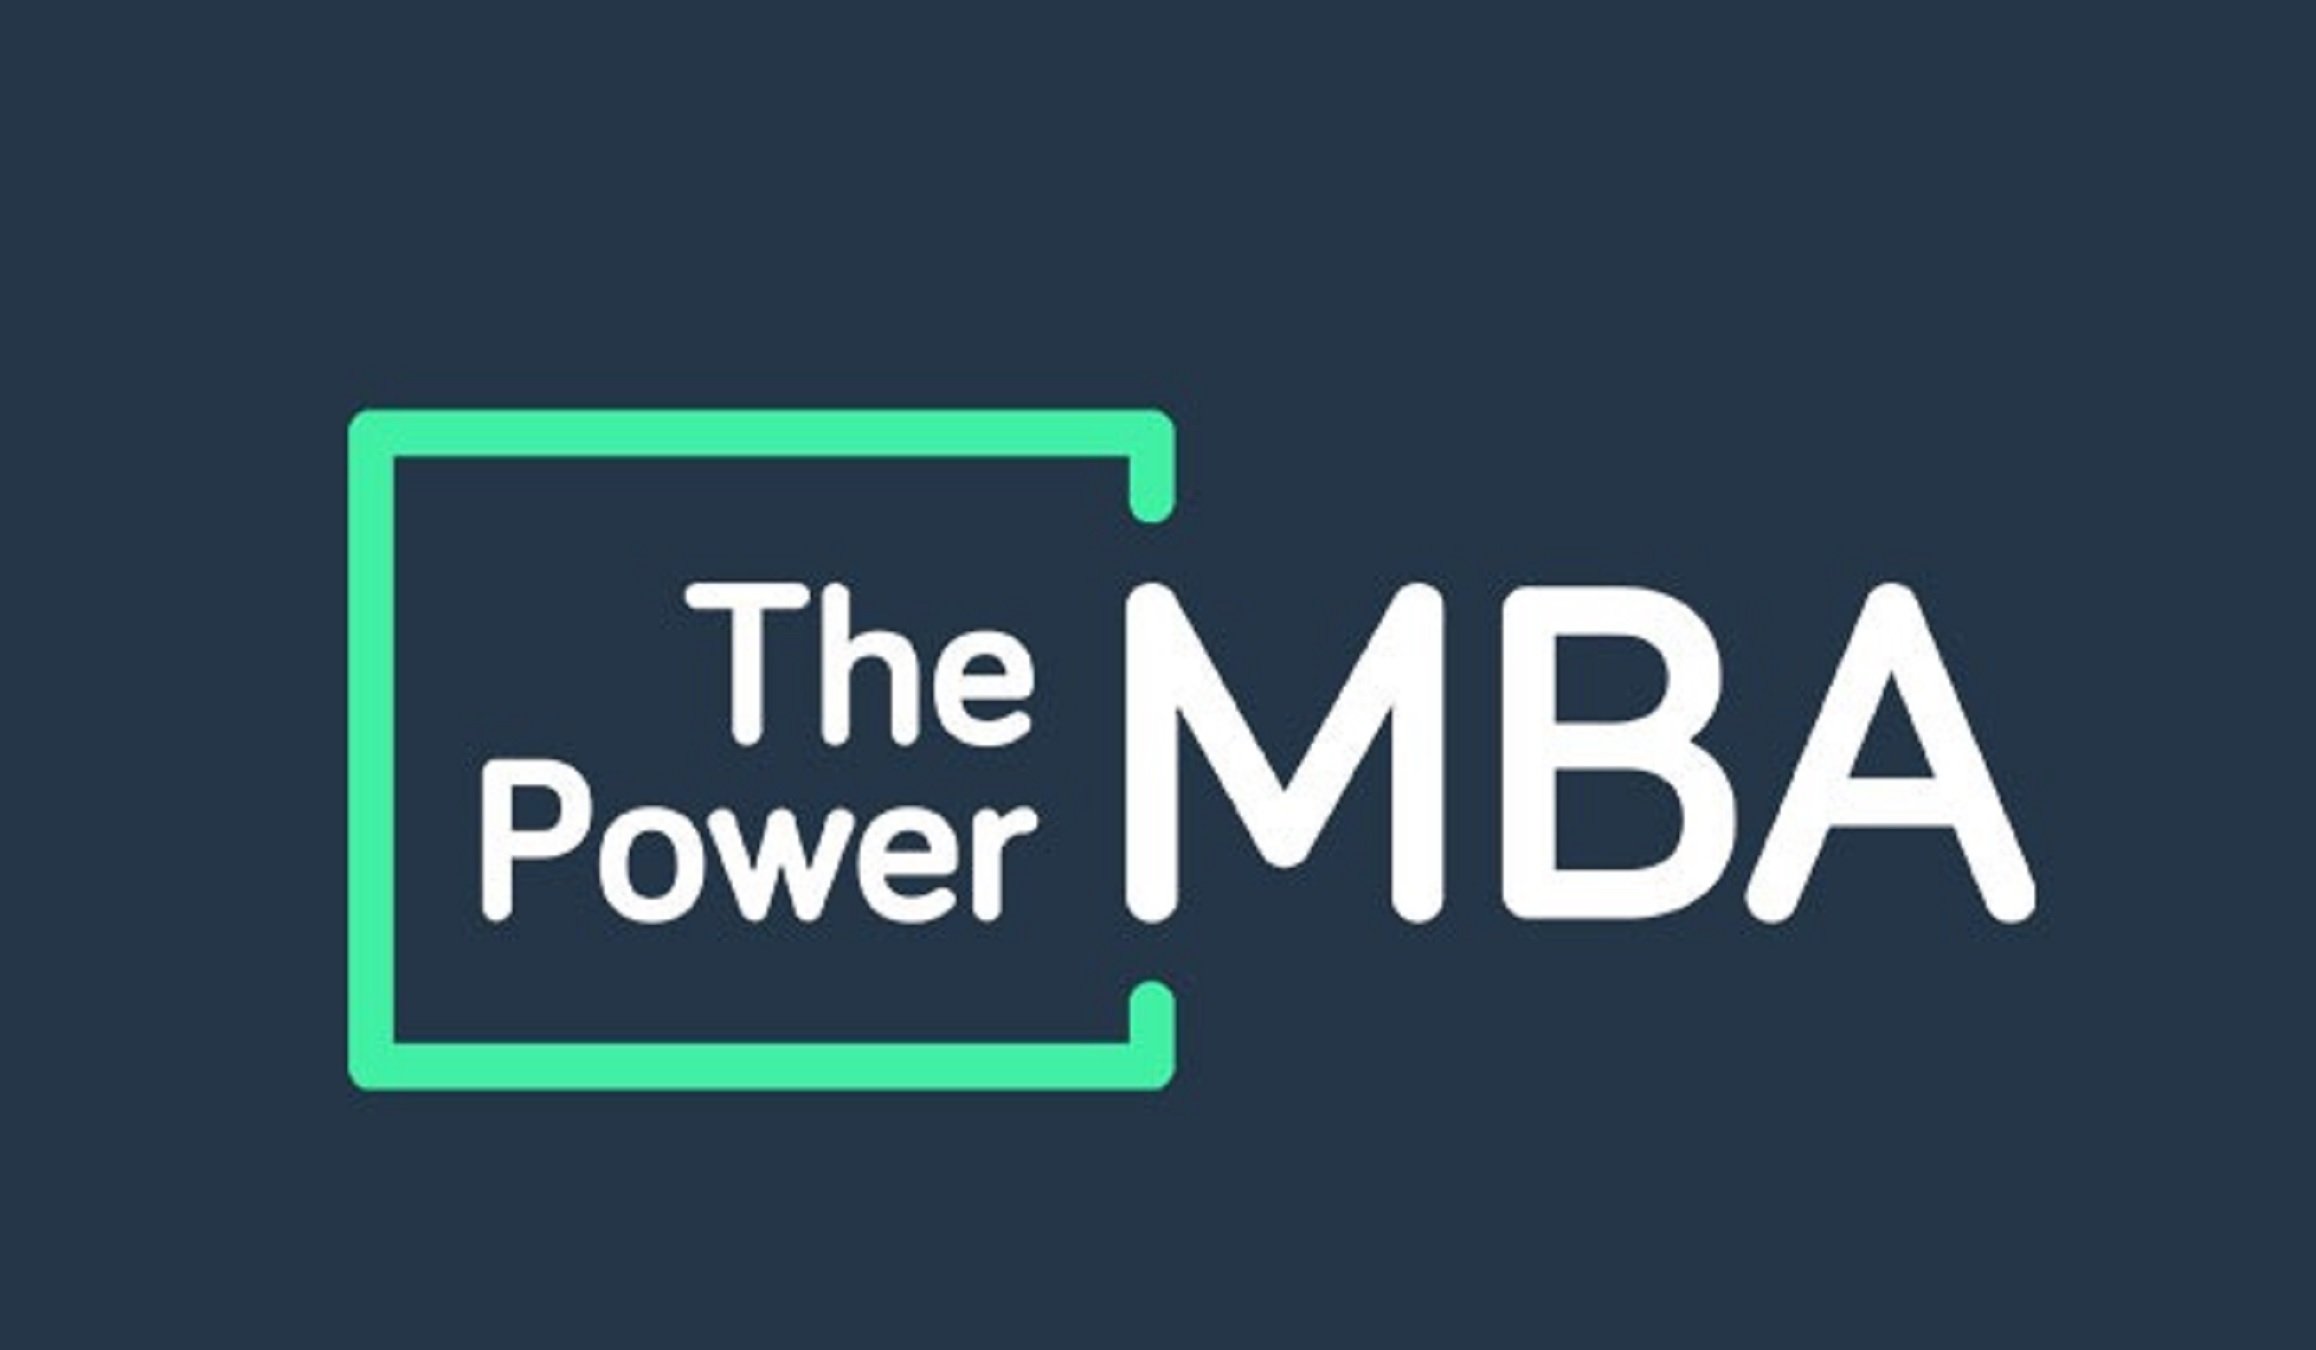 The Power MBA logo